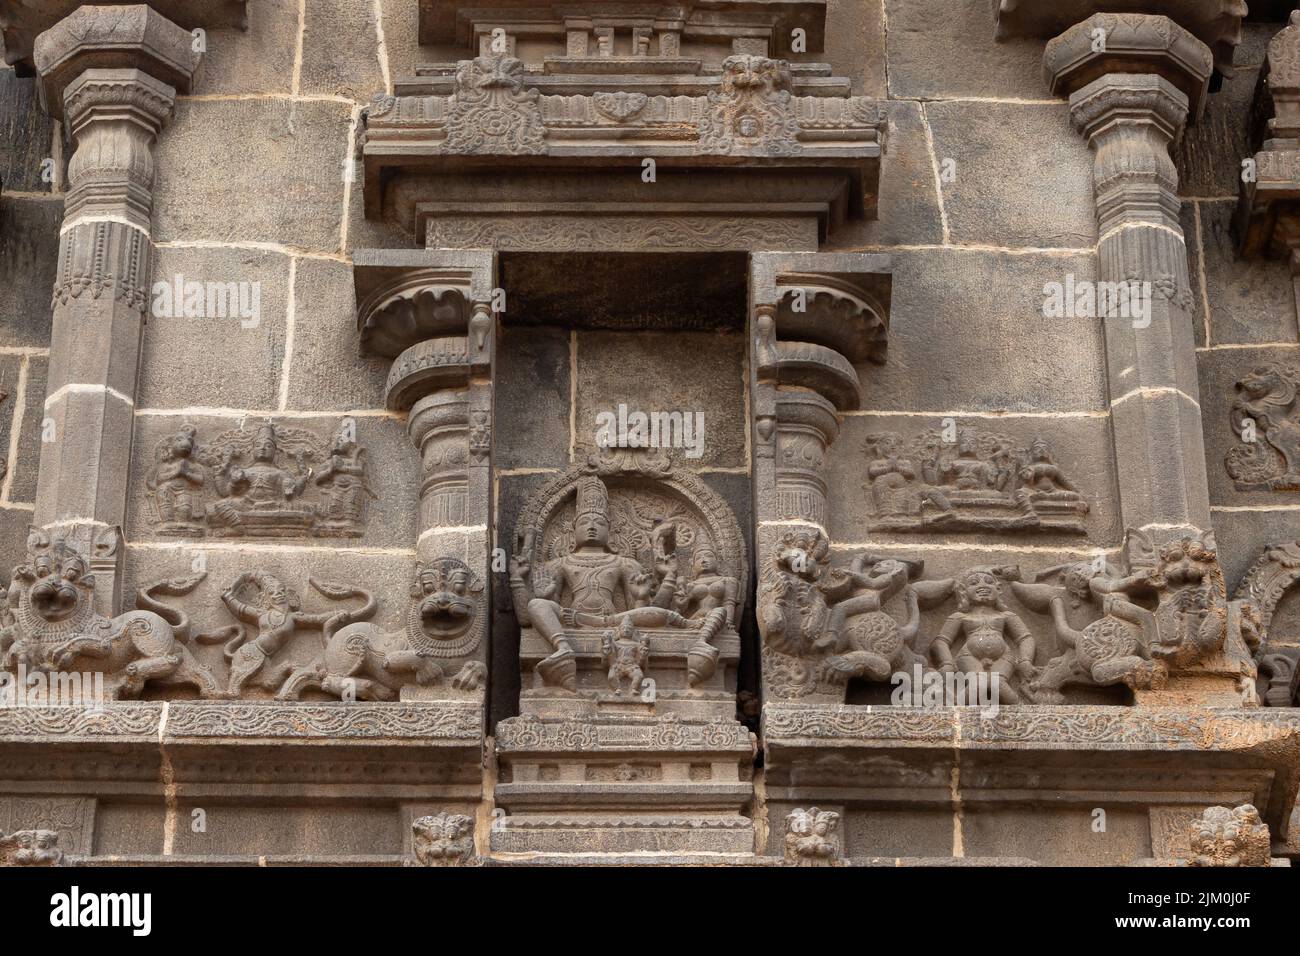 Escultura del Señor Vishnu y la Diosa Lakshmi sentado en el trono, Tiruvannamalai, Tamilnadu, India. Foto de stock